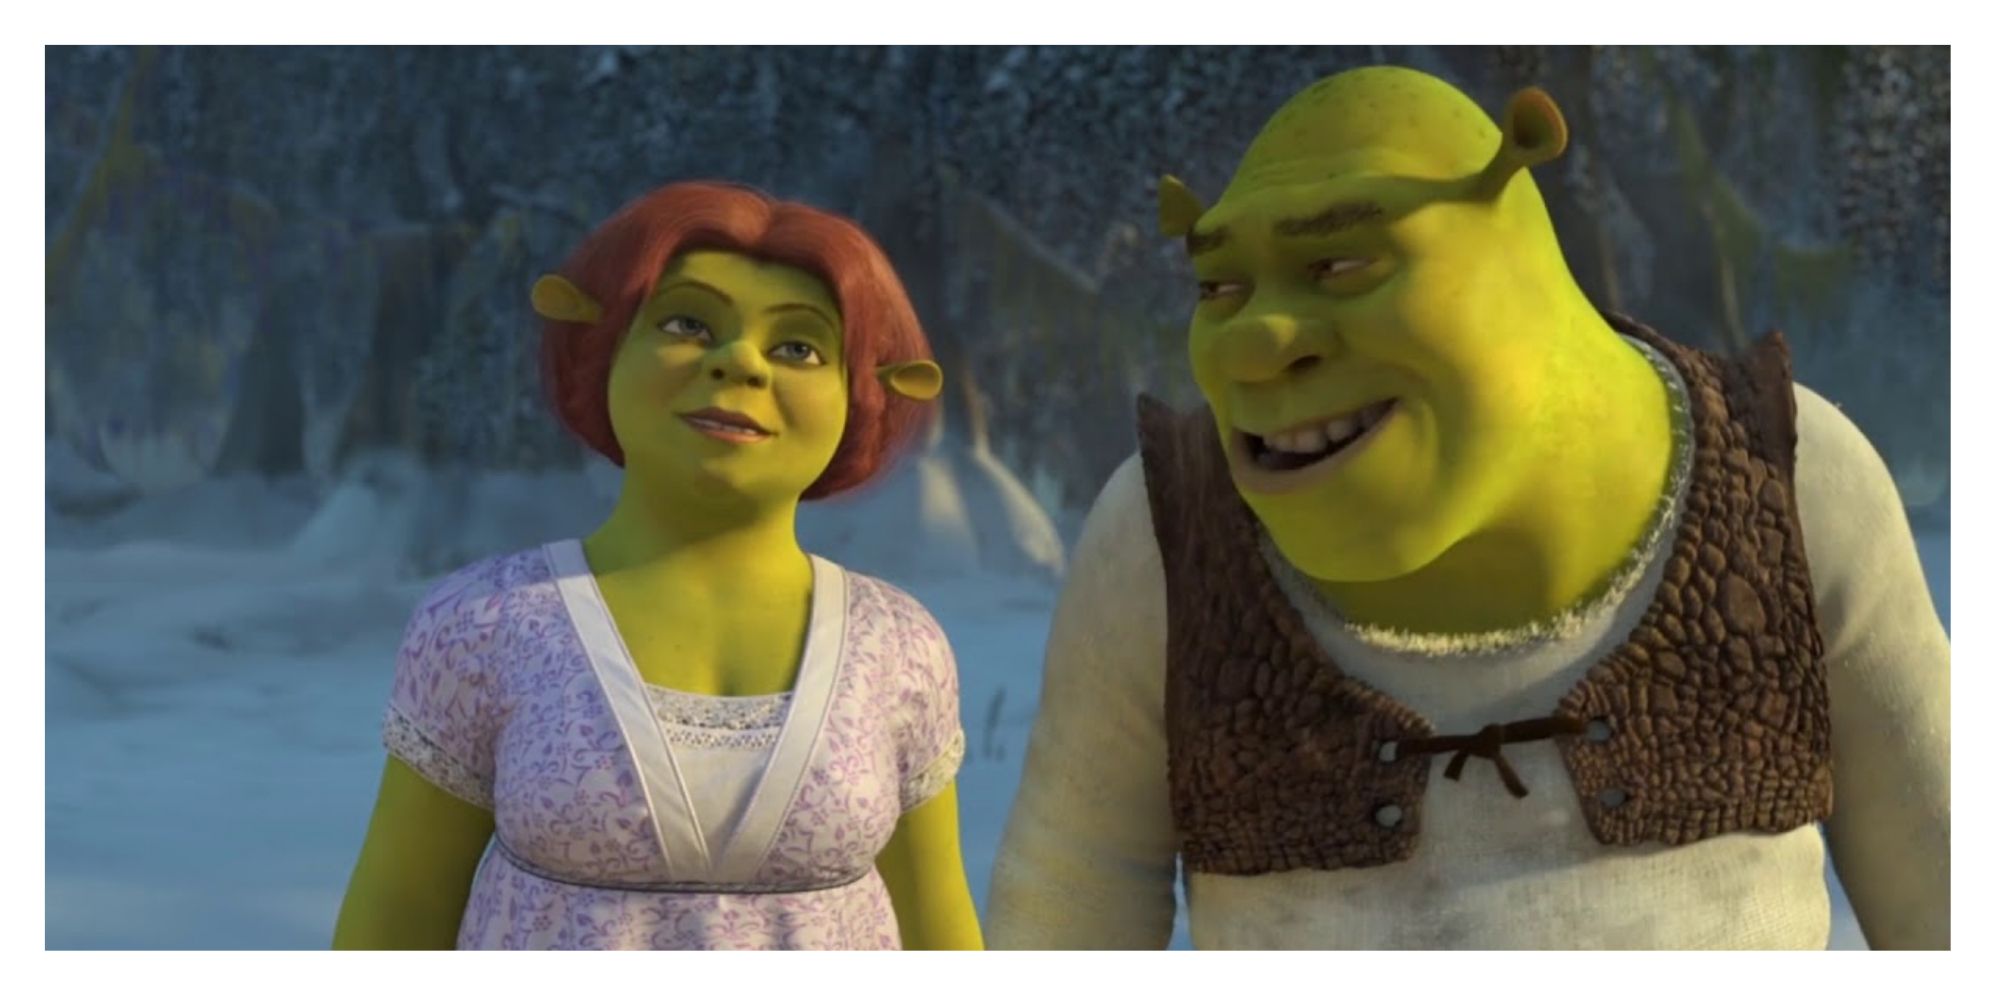 Shrek and Fiona in the Shrek christmas special, Shrek the Halls